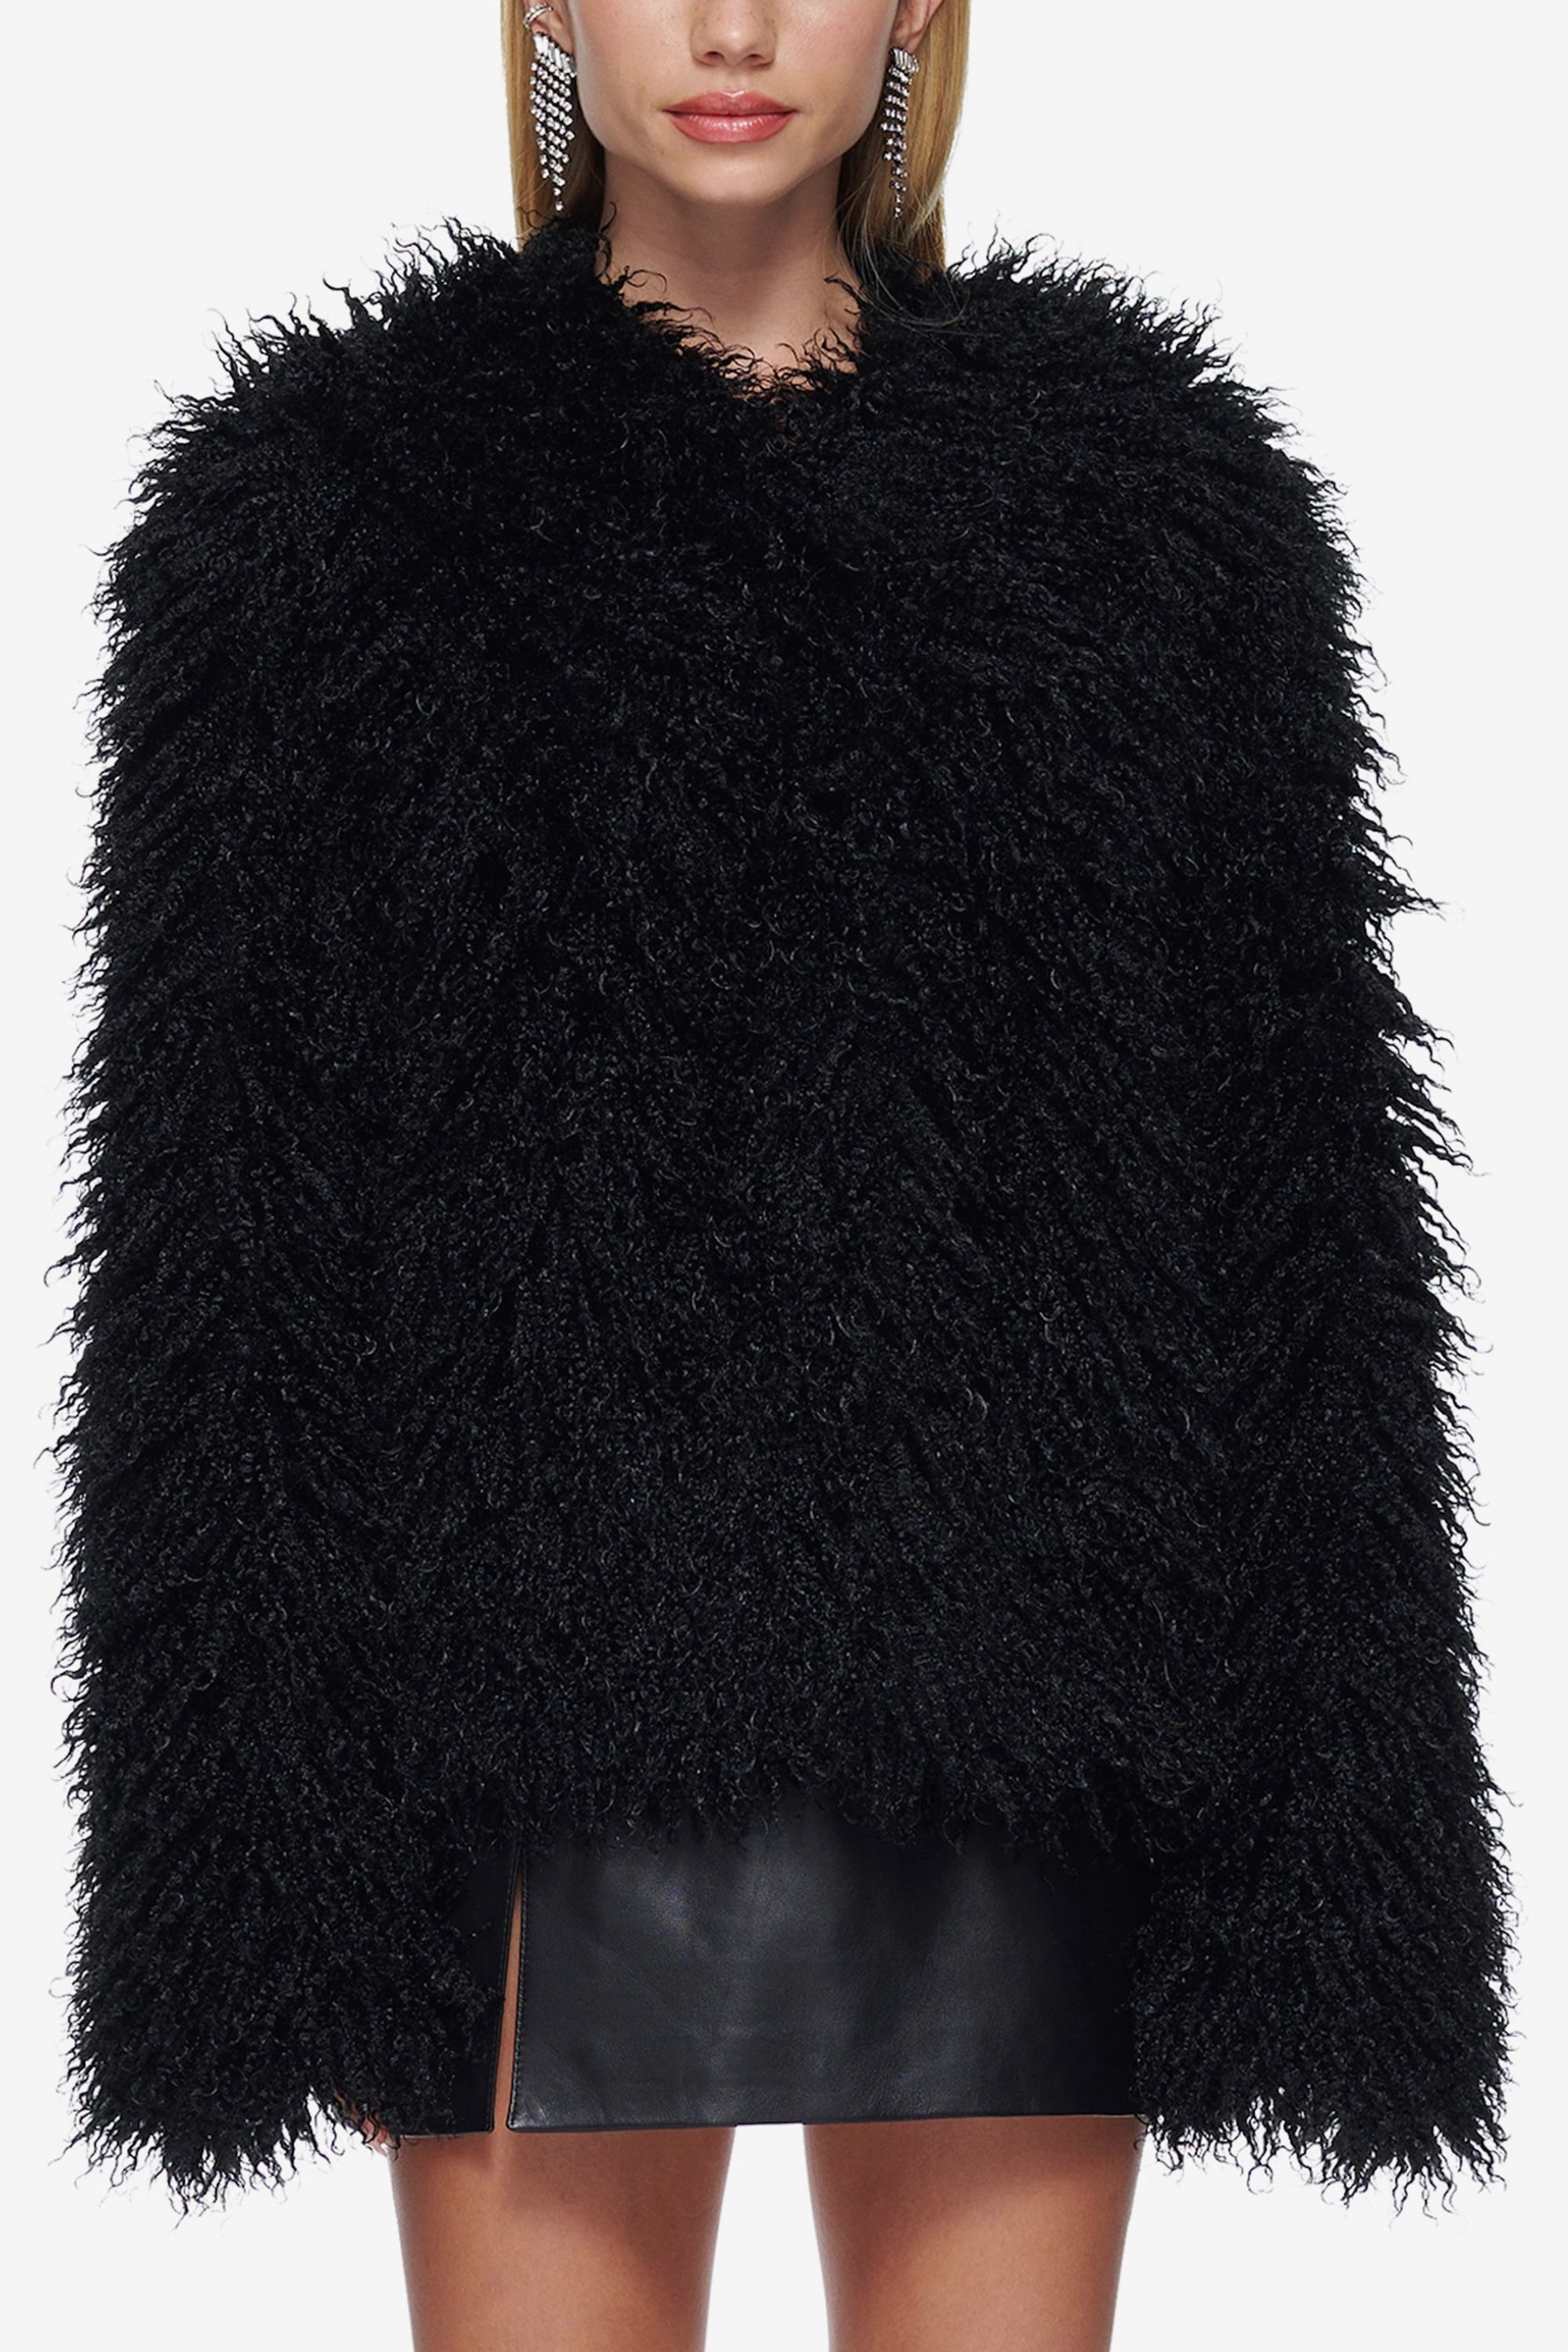 The Faux Mongolian Fur Jacket